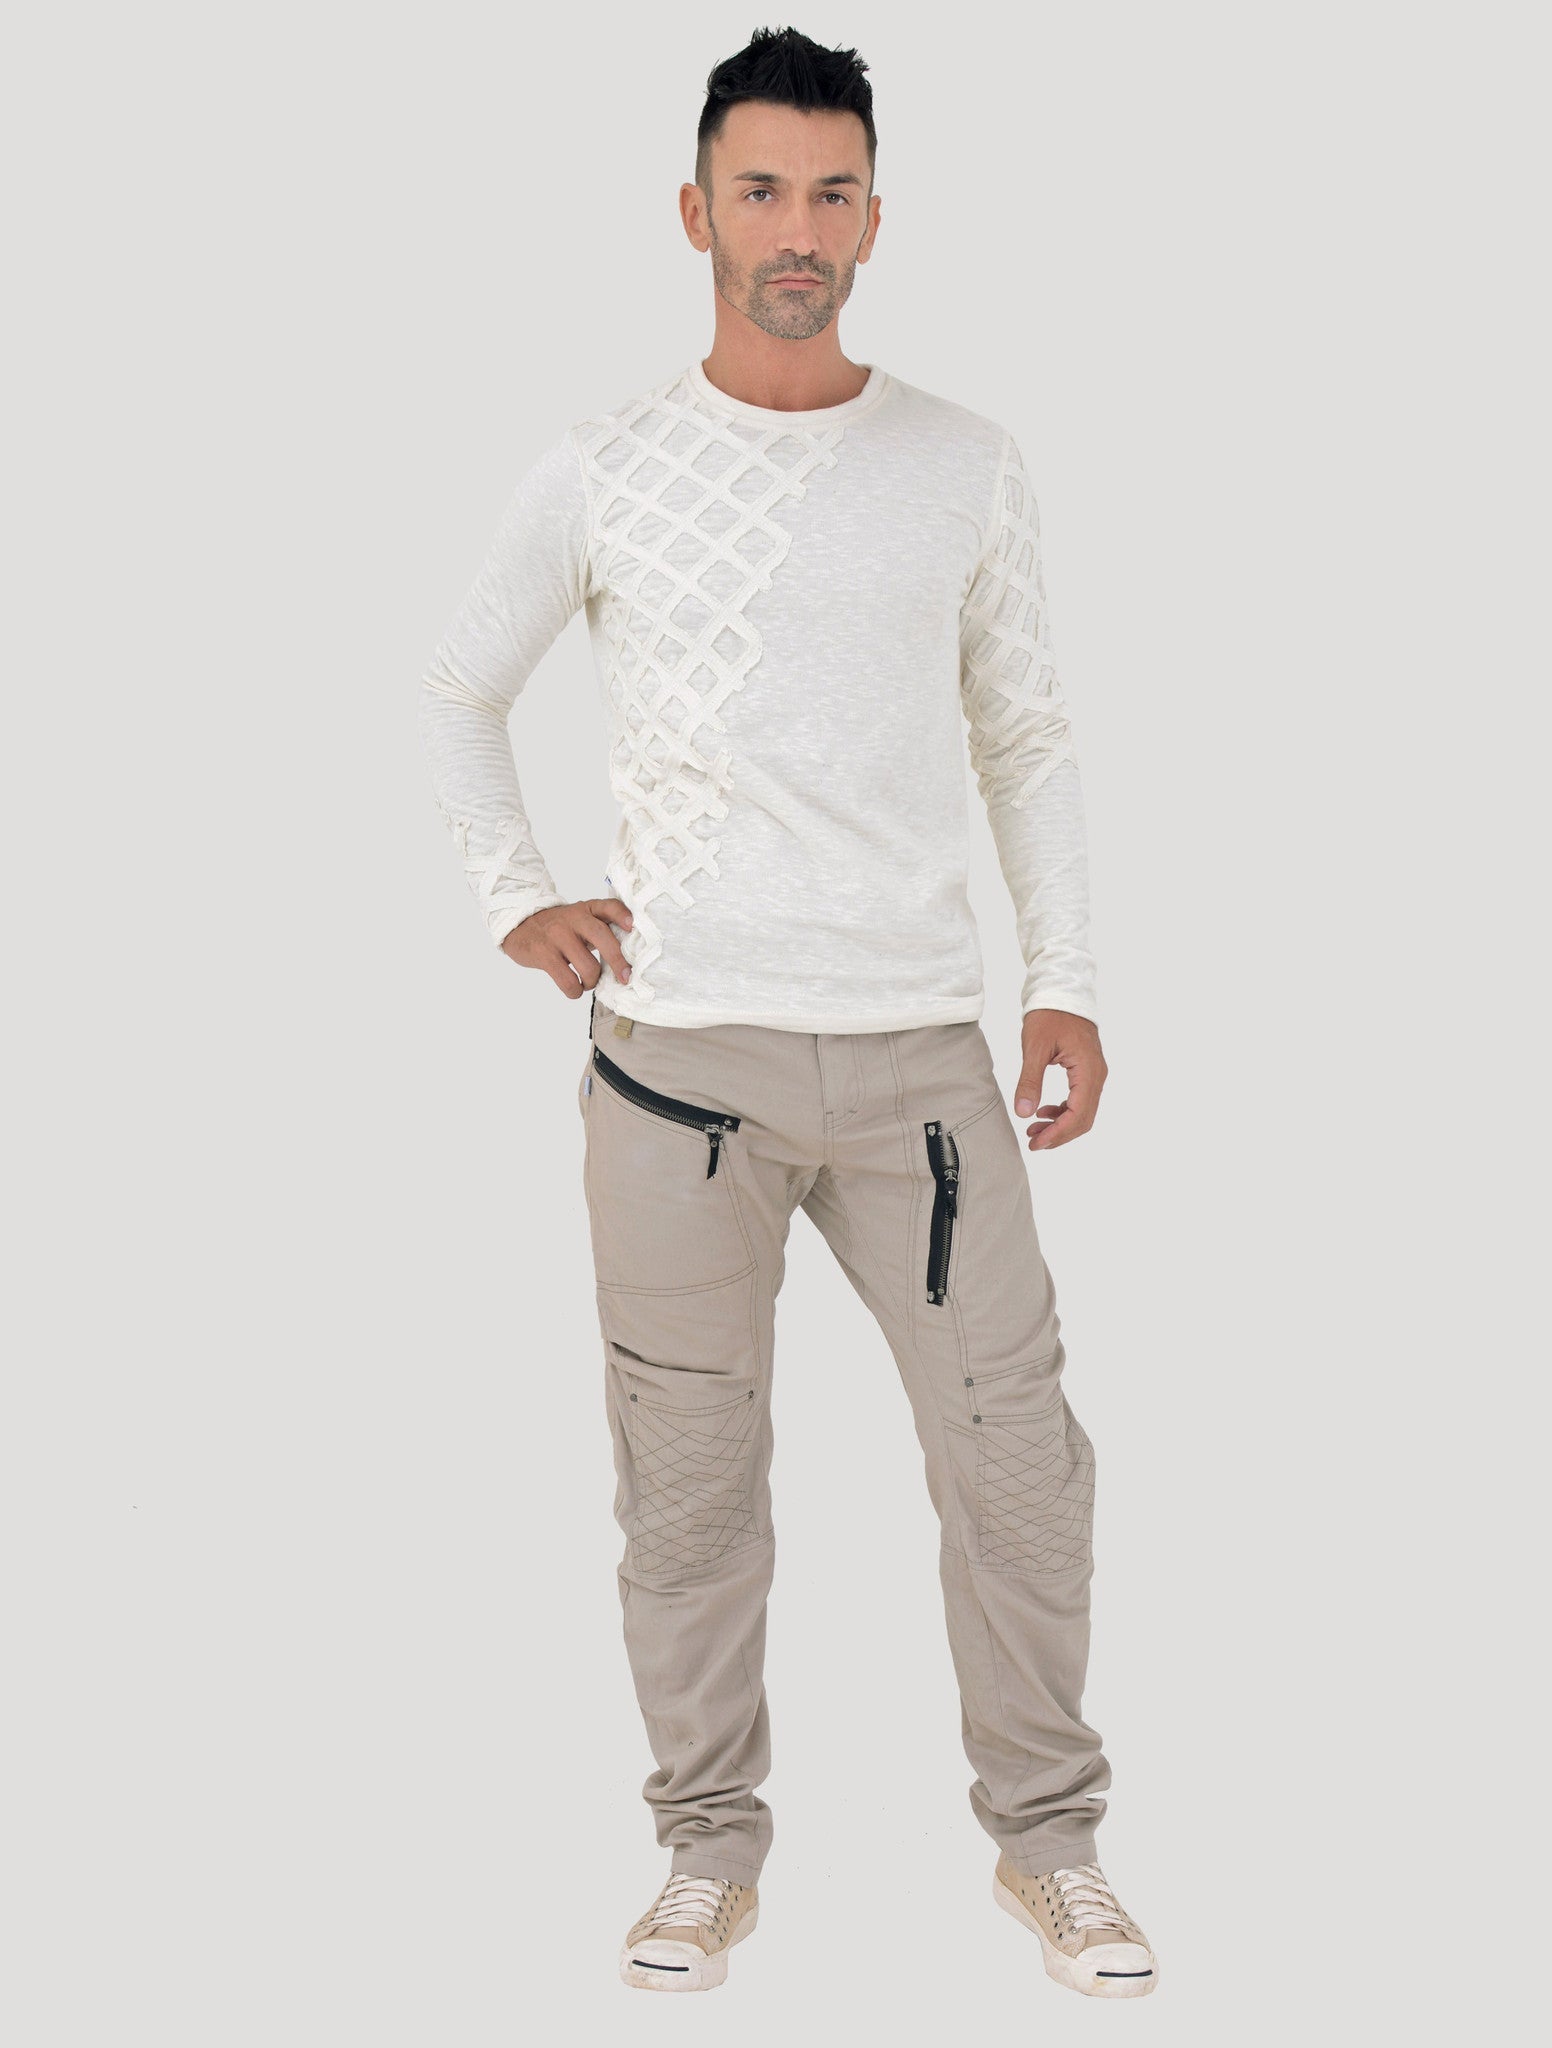 'Gauda' off white Sweater - Psylo Fashion